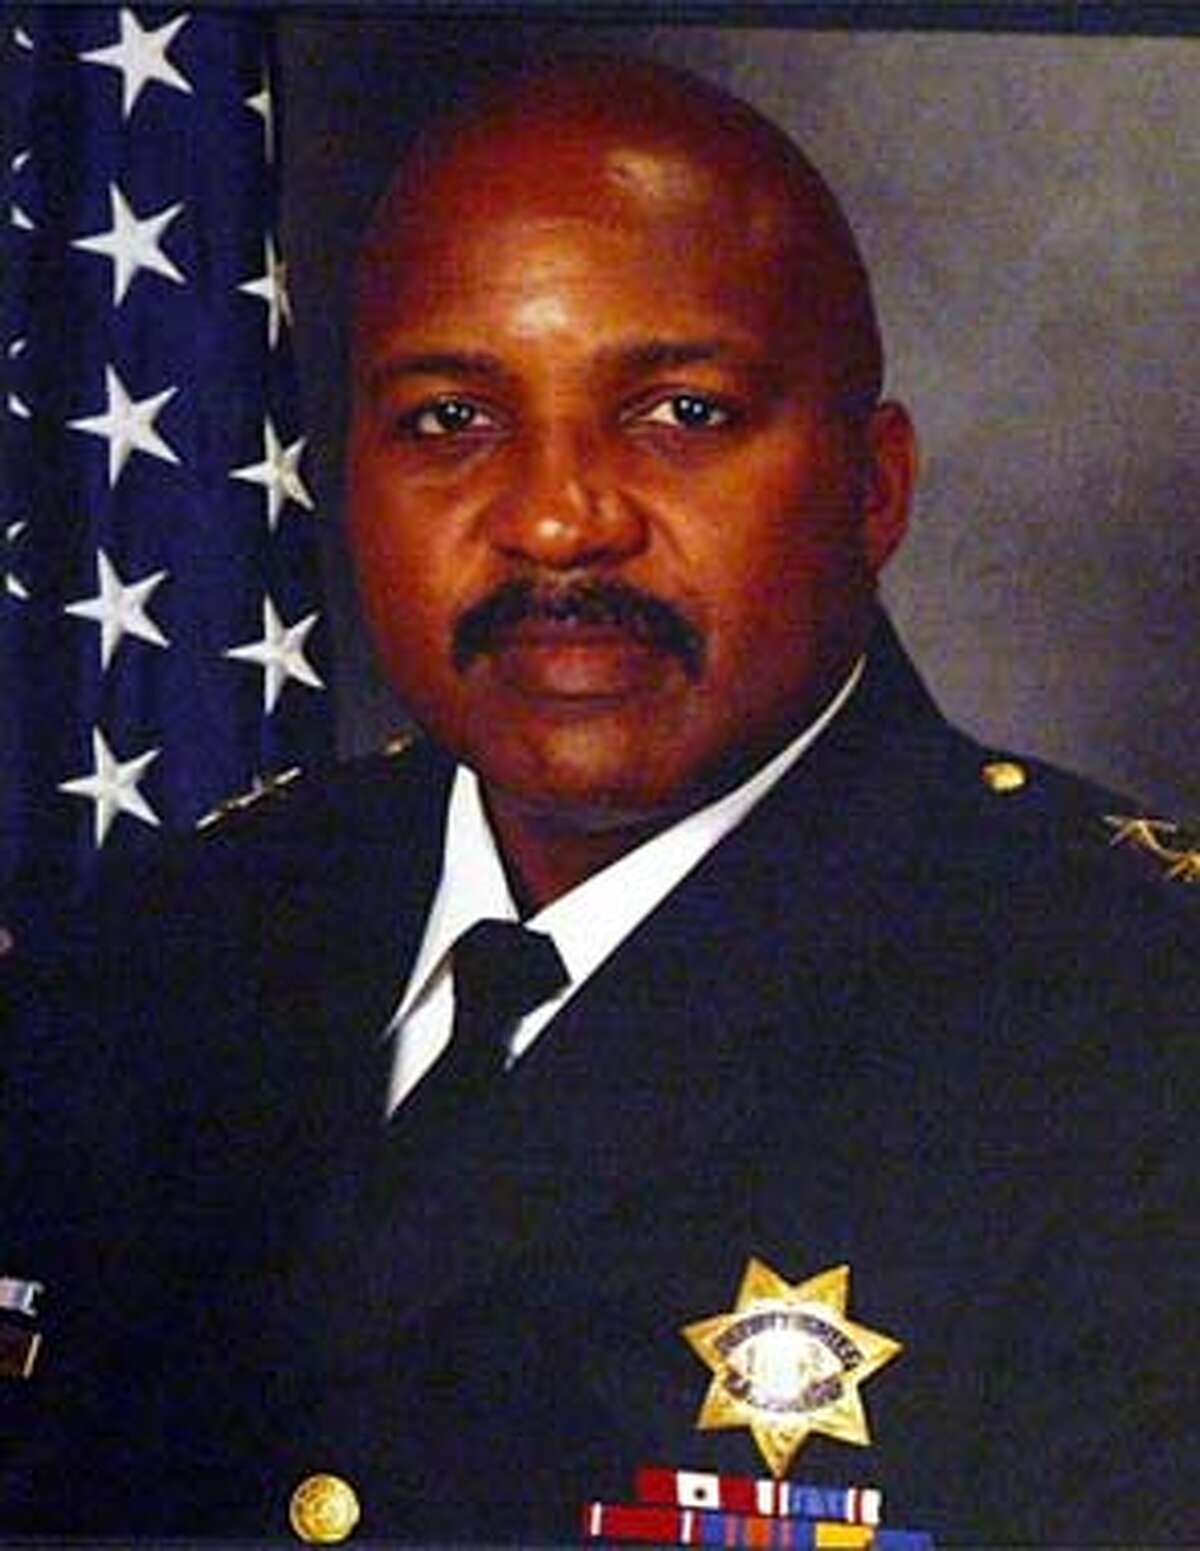 Deputy Chief David Robinson